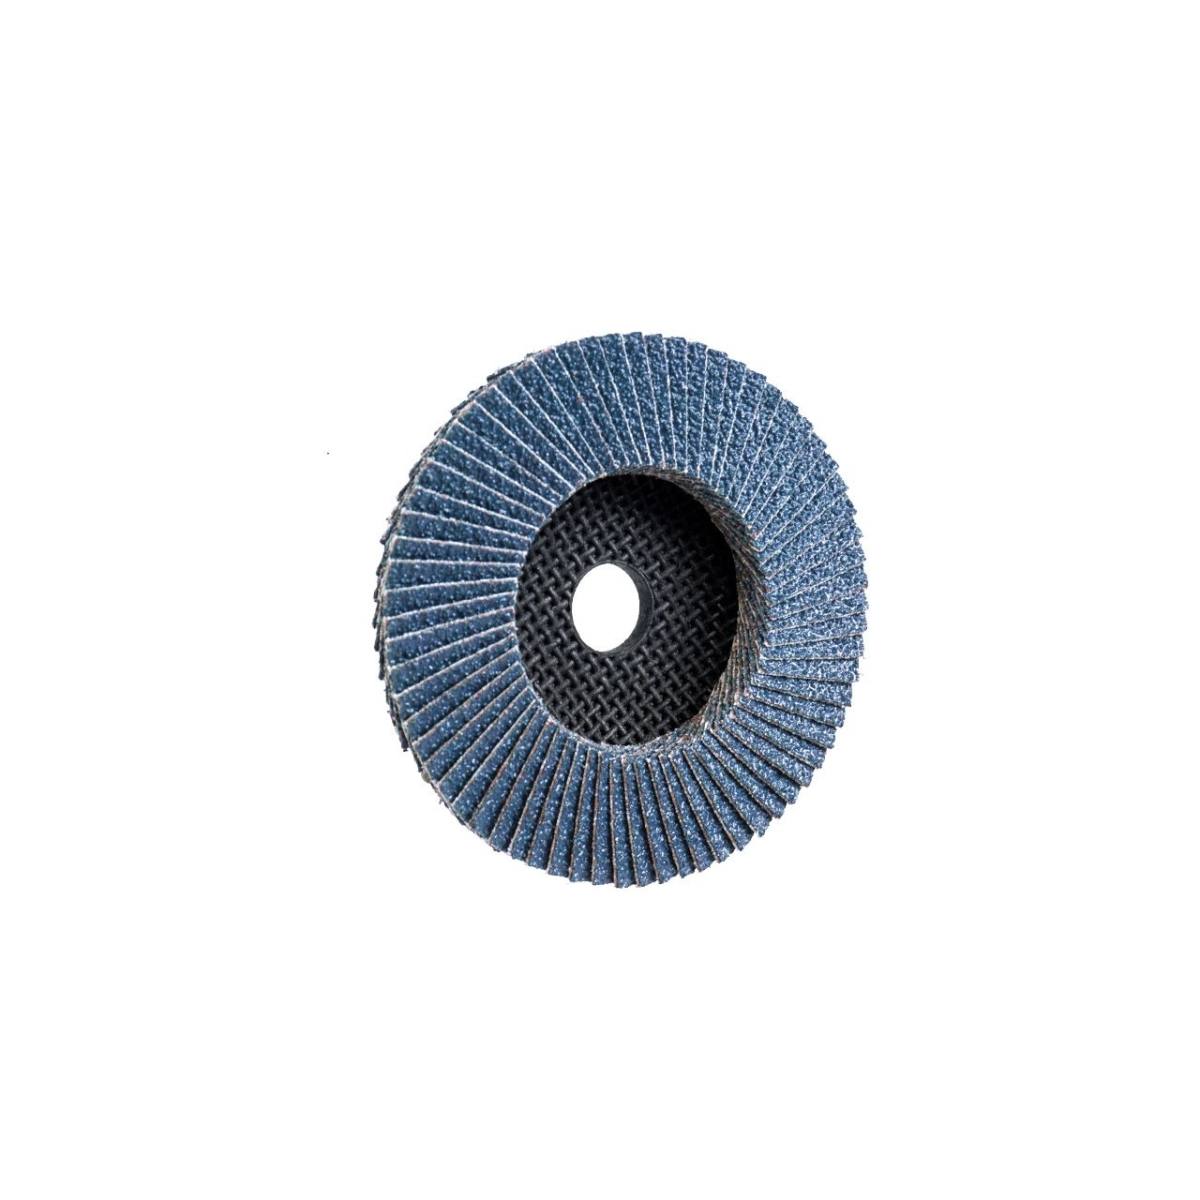 TRIMFIX ZIRCOPUR, 100 mm x 15,2 mm, grano 80, disco de láminas